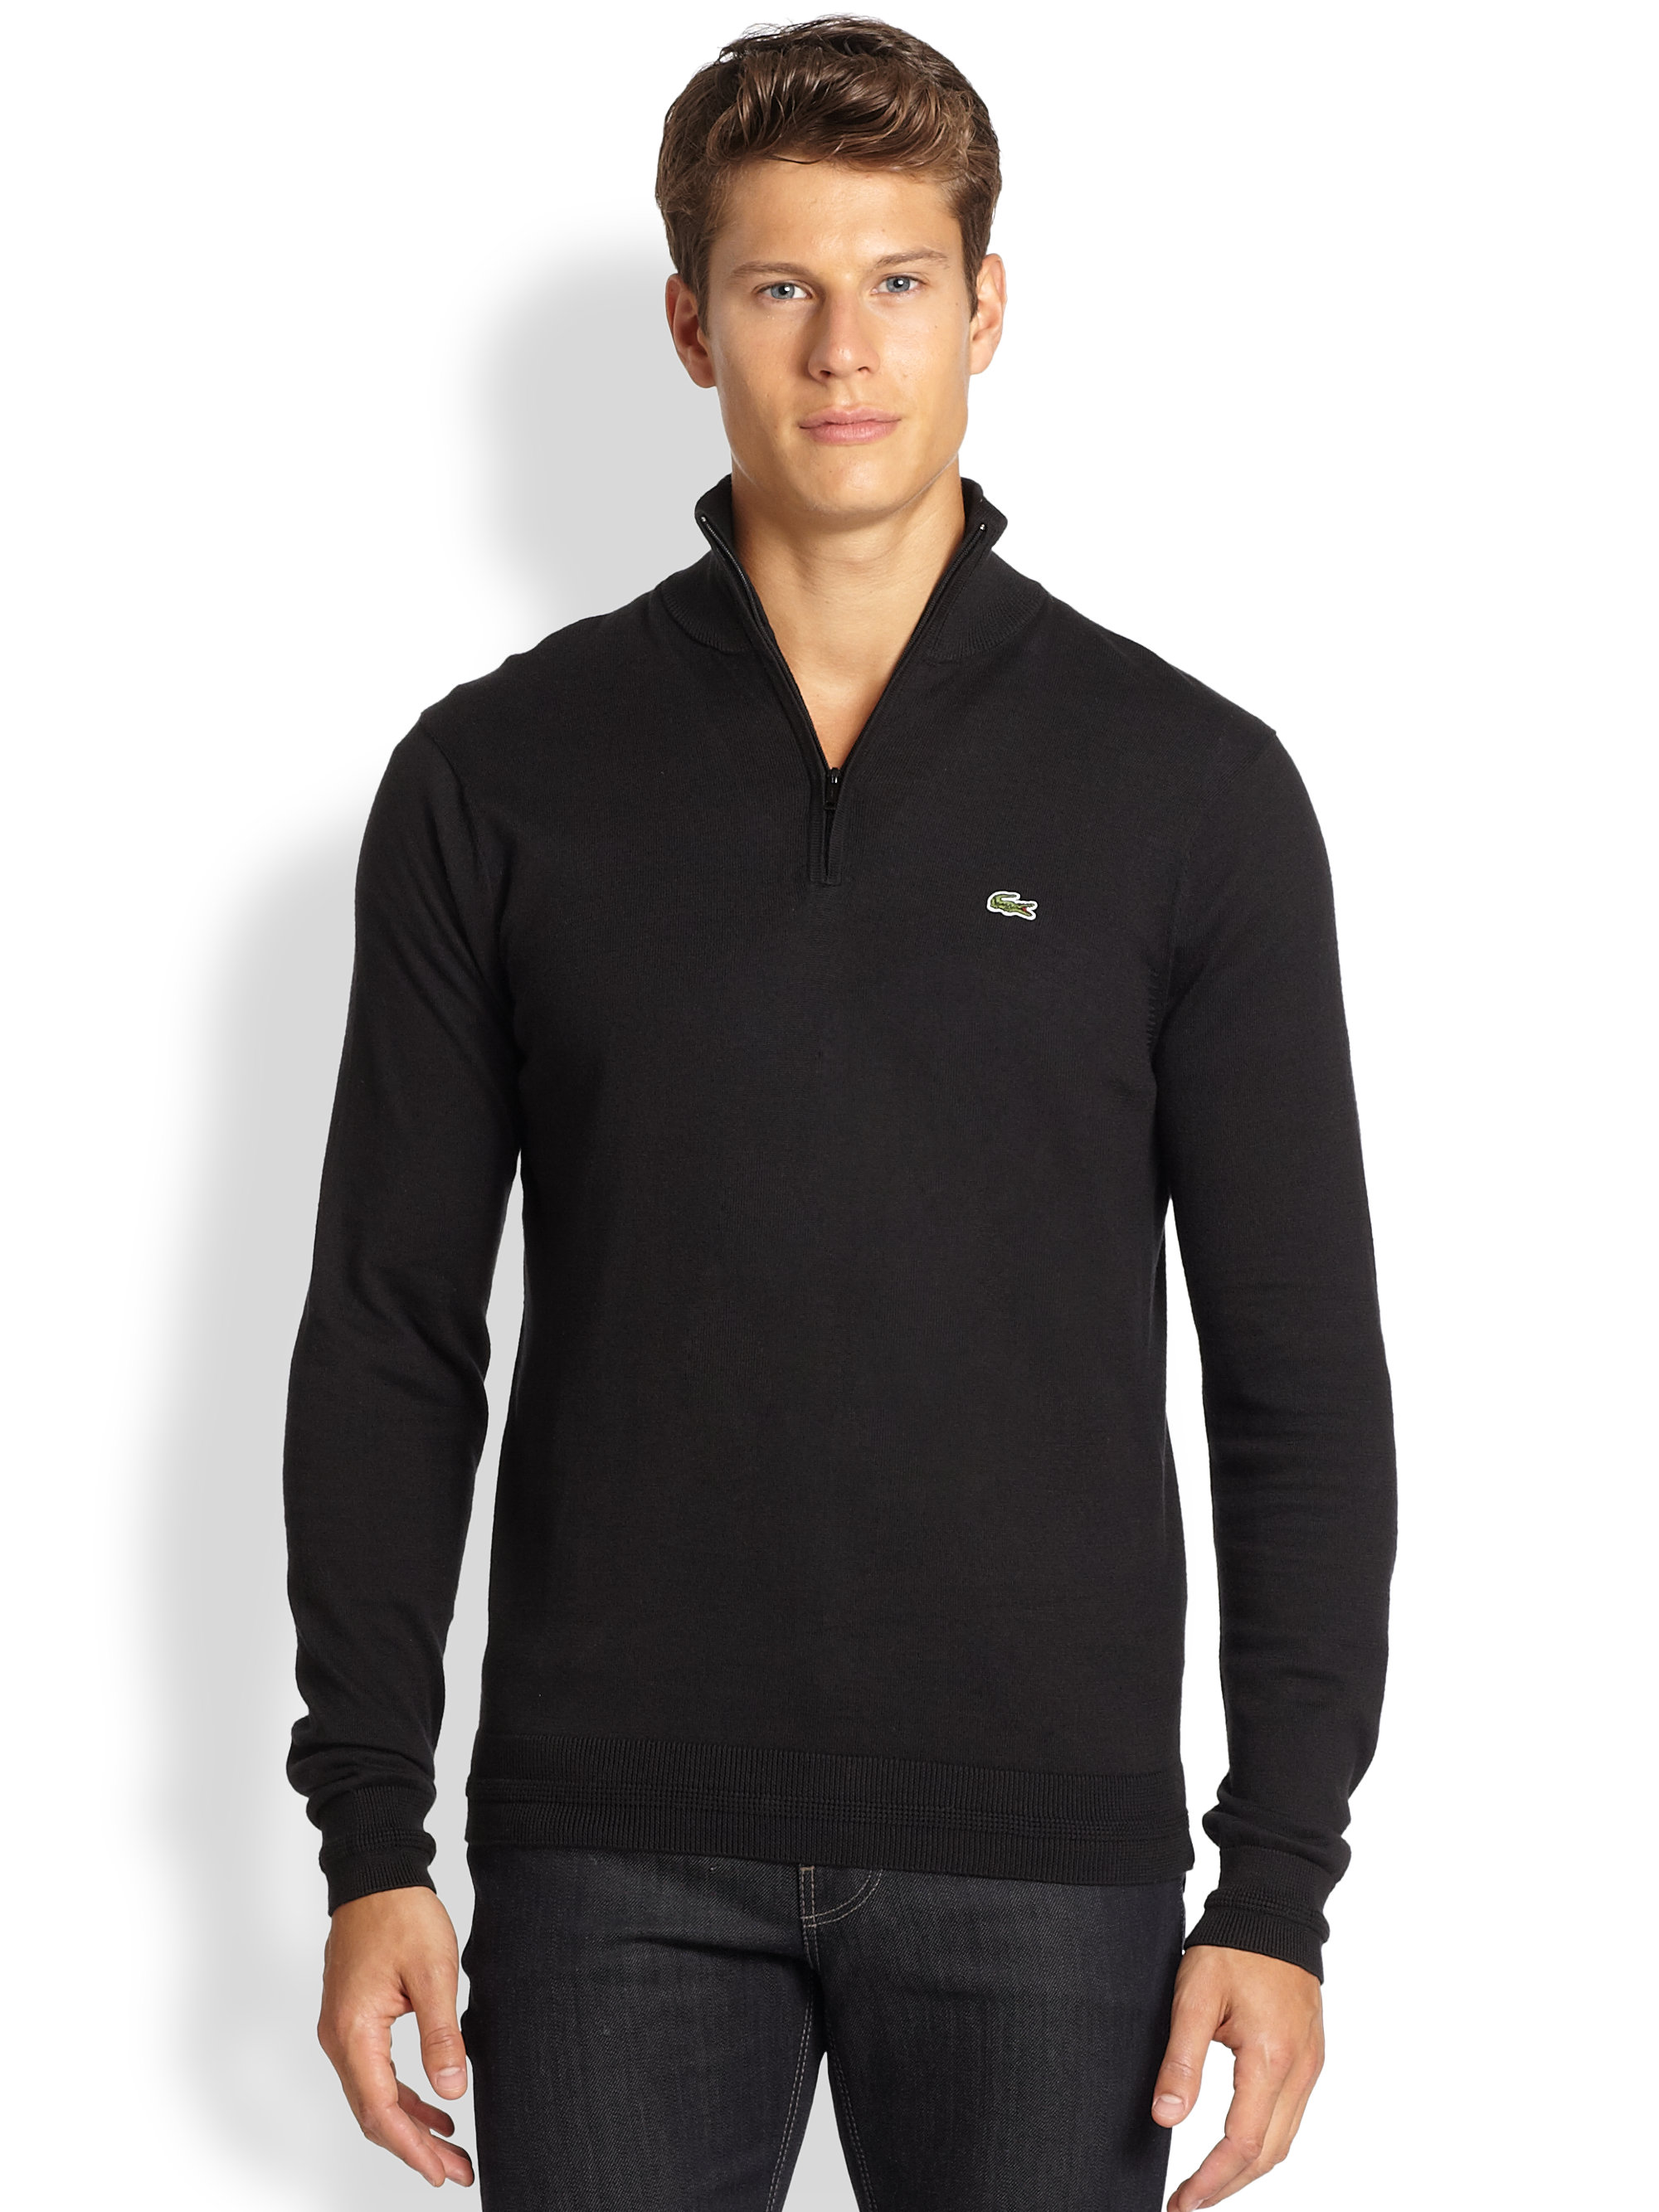 Lyst - Lacoste Quarter Zip Sweater in Black for Men